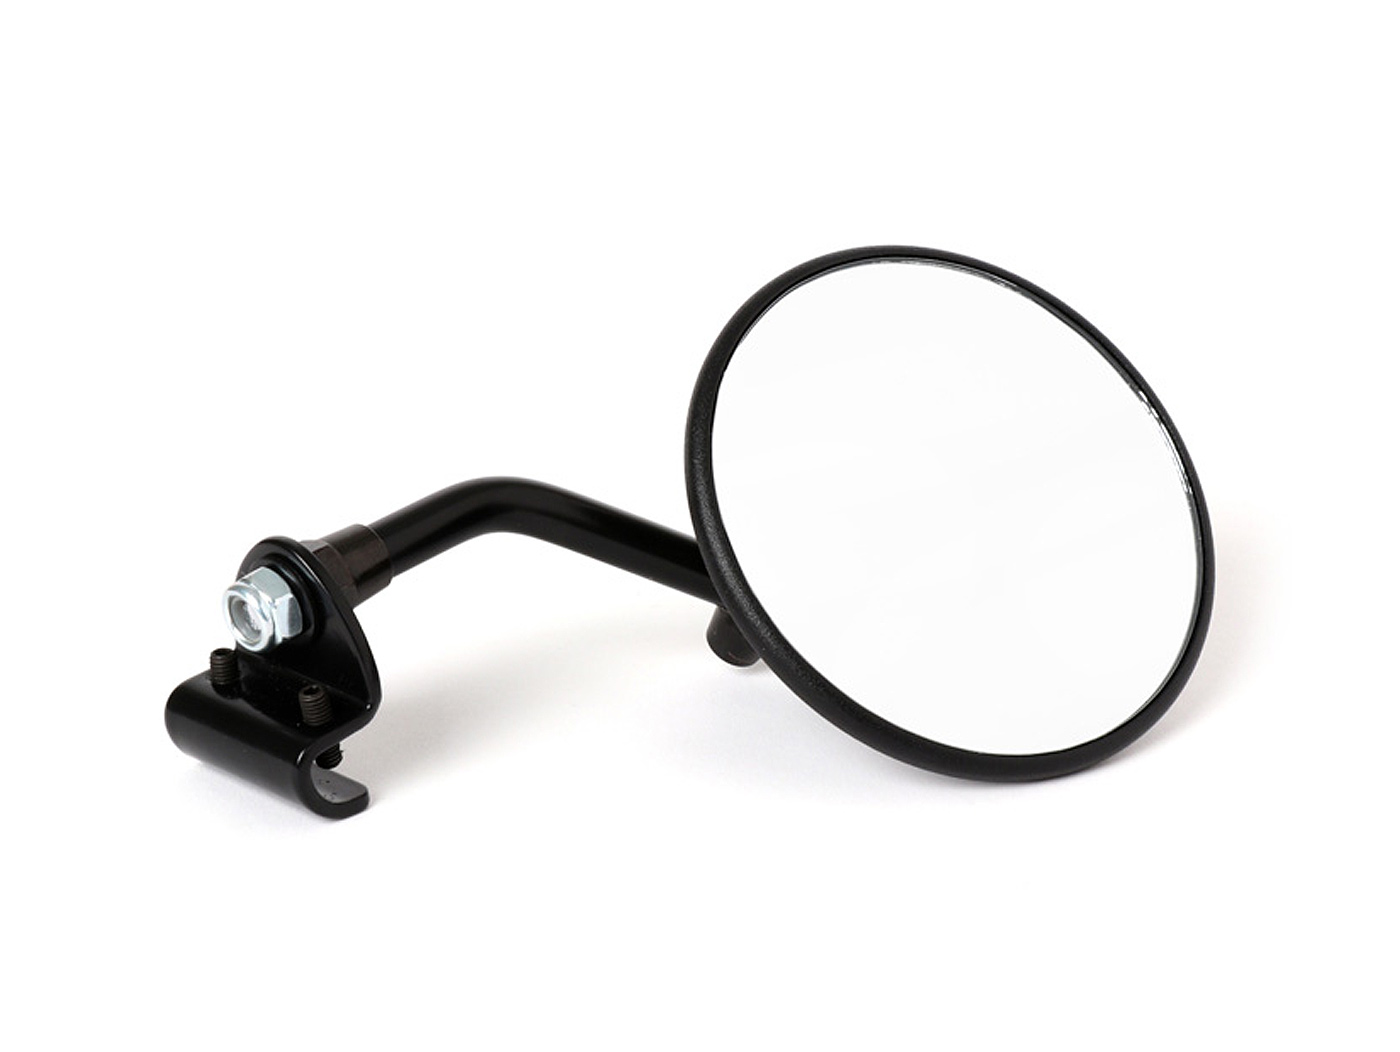 Klemm Spiegel Rückspiegel M8 universal 102mm rund schwarz Mofa Roller Moped  Quad